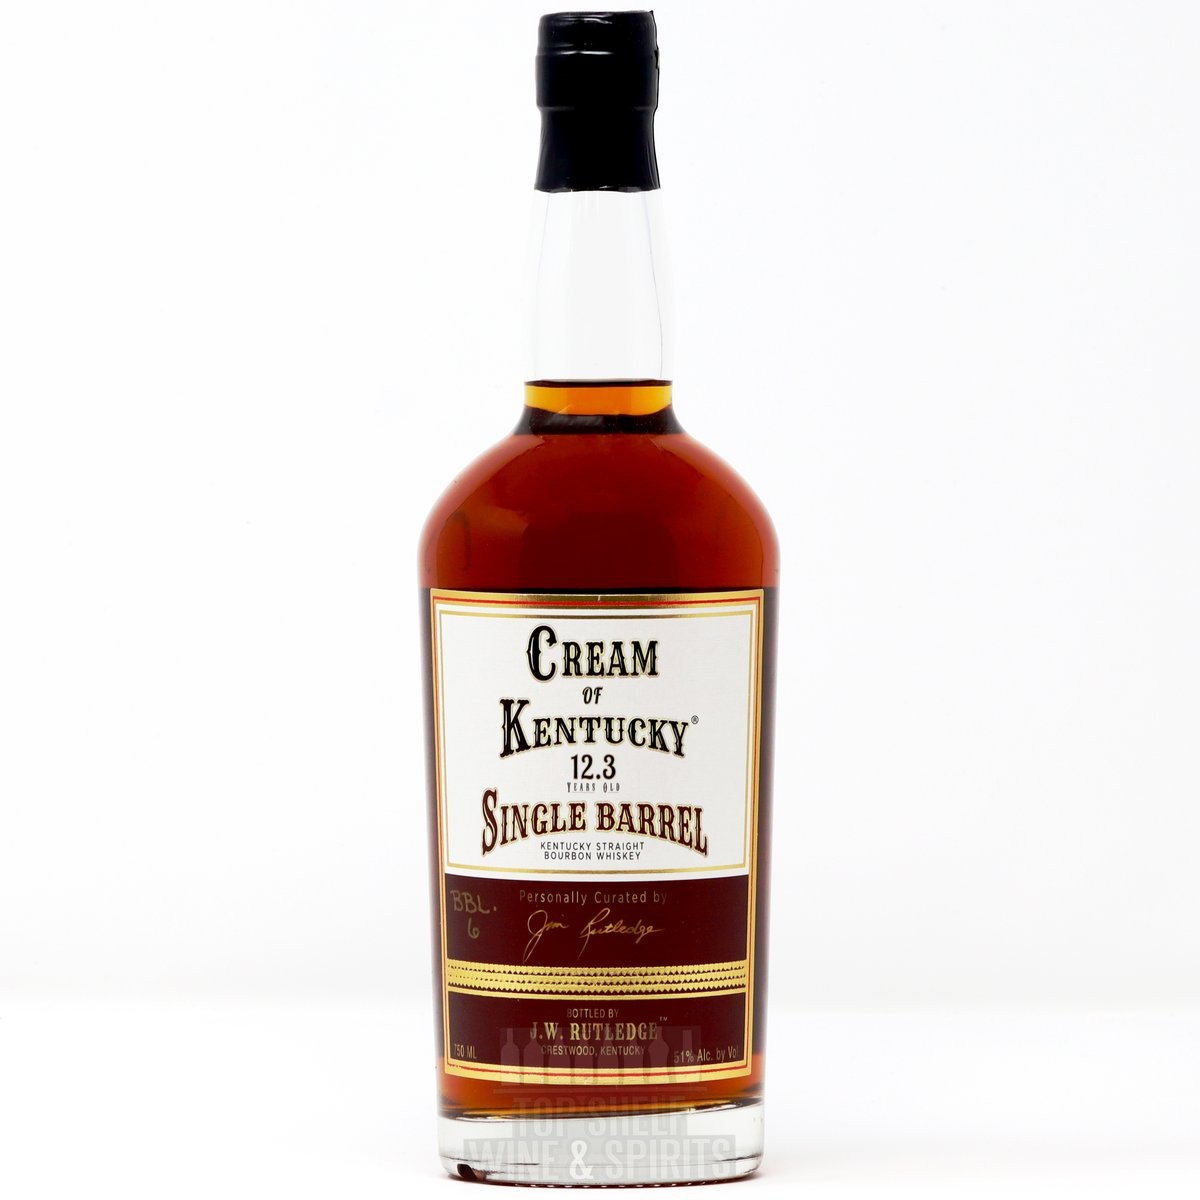 Cream of Aged 12.3 Years - Single Barrel Kentucky Straight Bourbon Whiskey 750ml